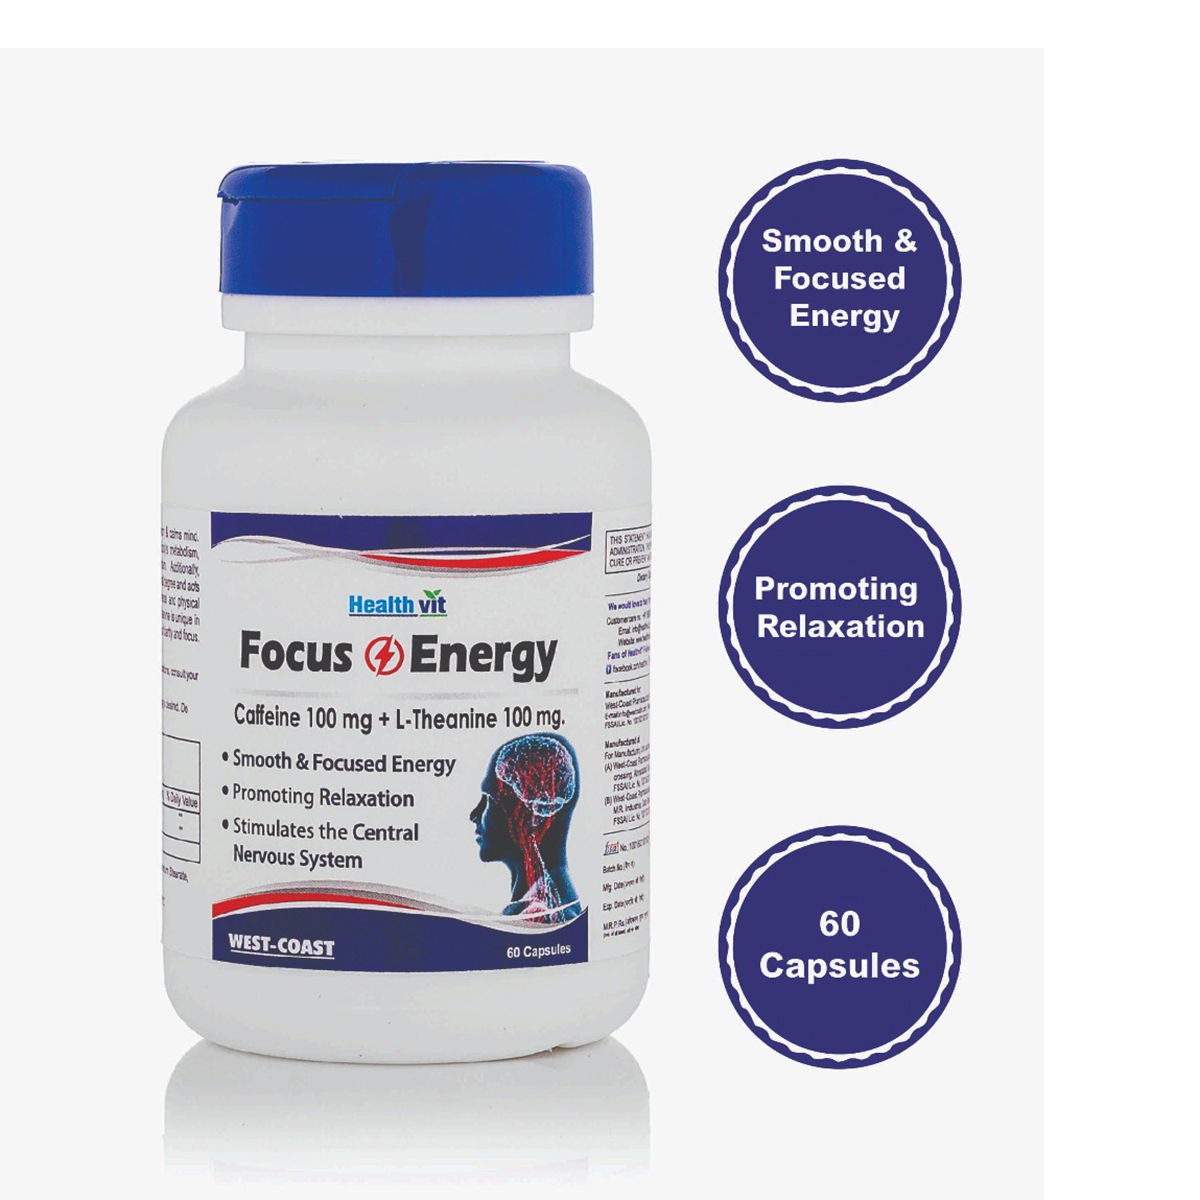 Healthvit Focus & Energy Caffeine 100 mg L-Theanine 100 mg, 60 Capsules, Pack of 1 